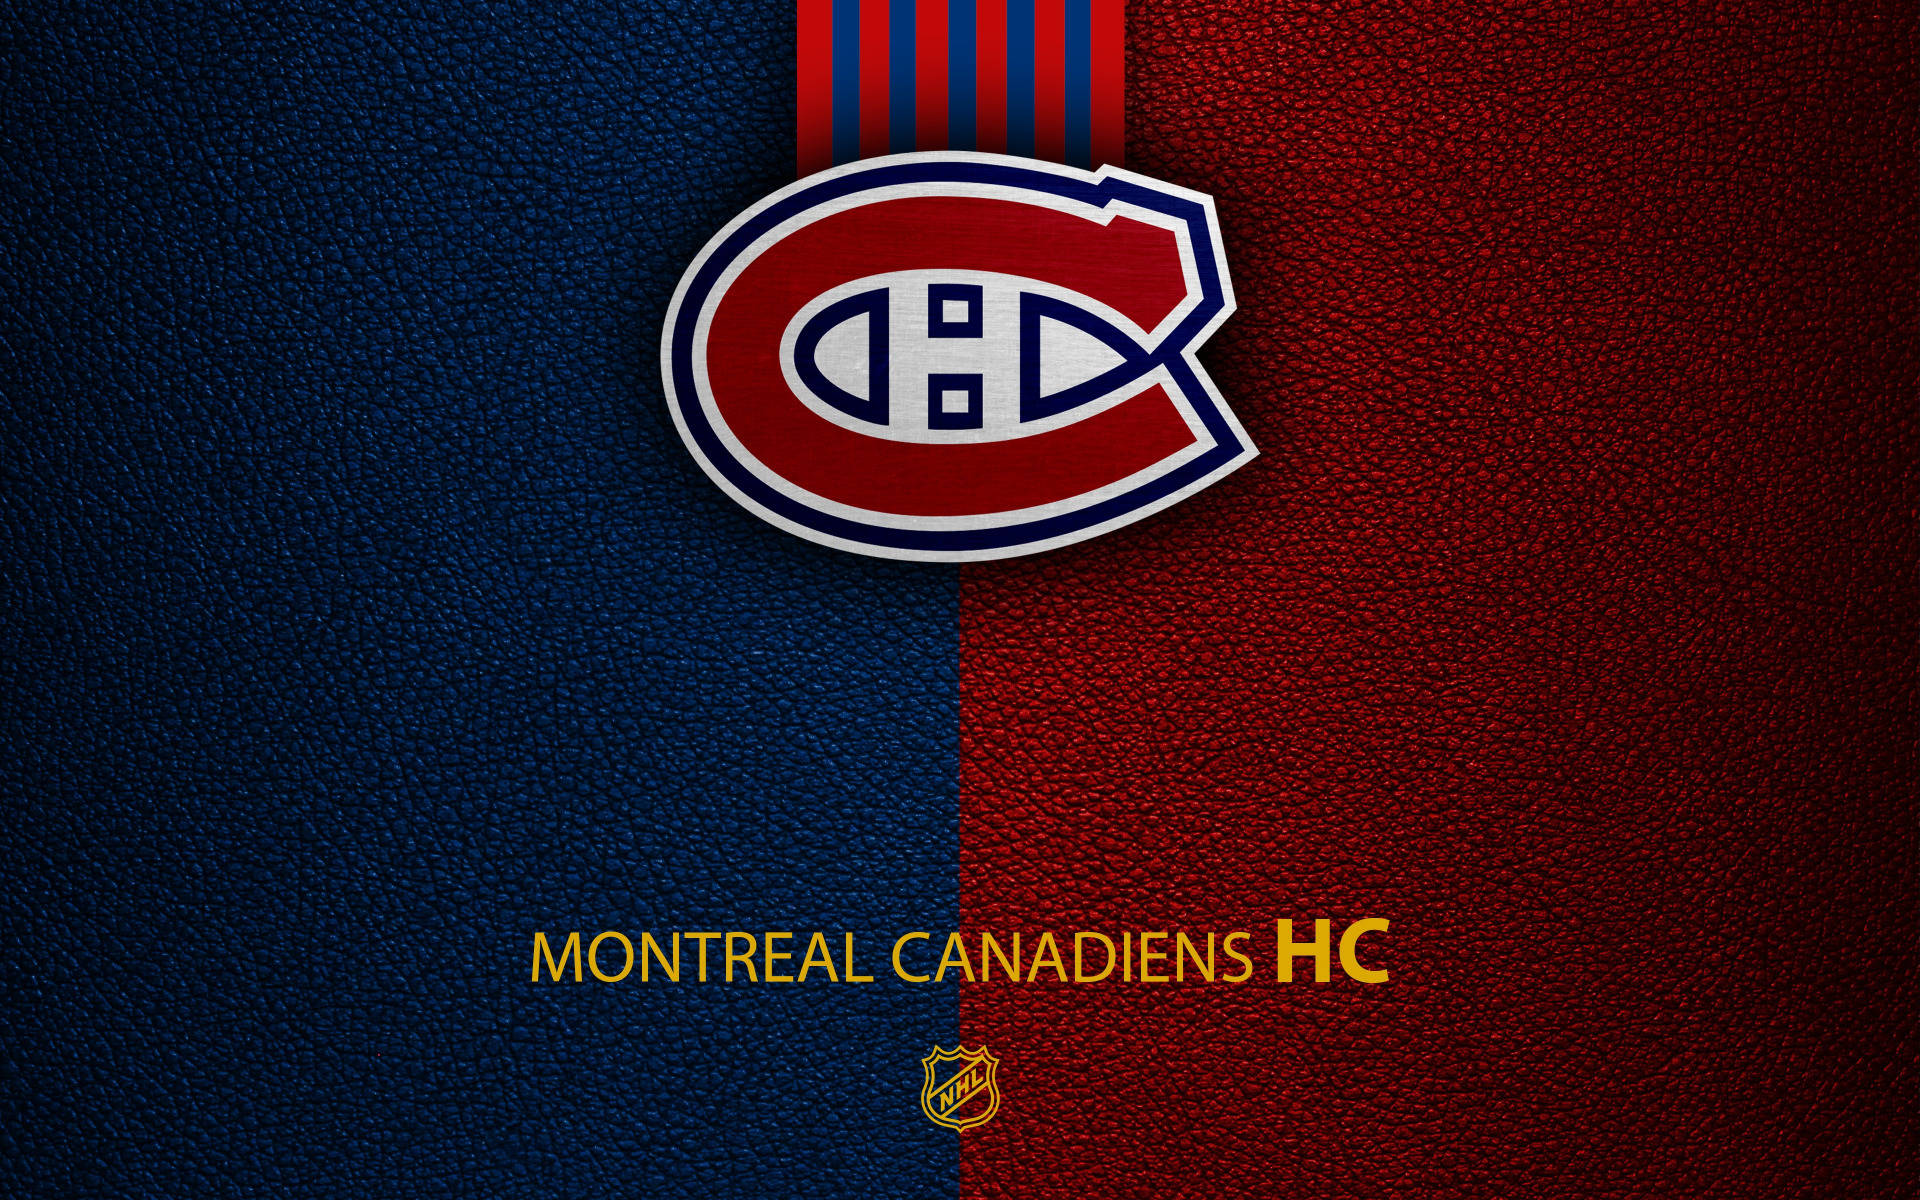 Ice Hockey Team Montreal Canadiens Background